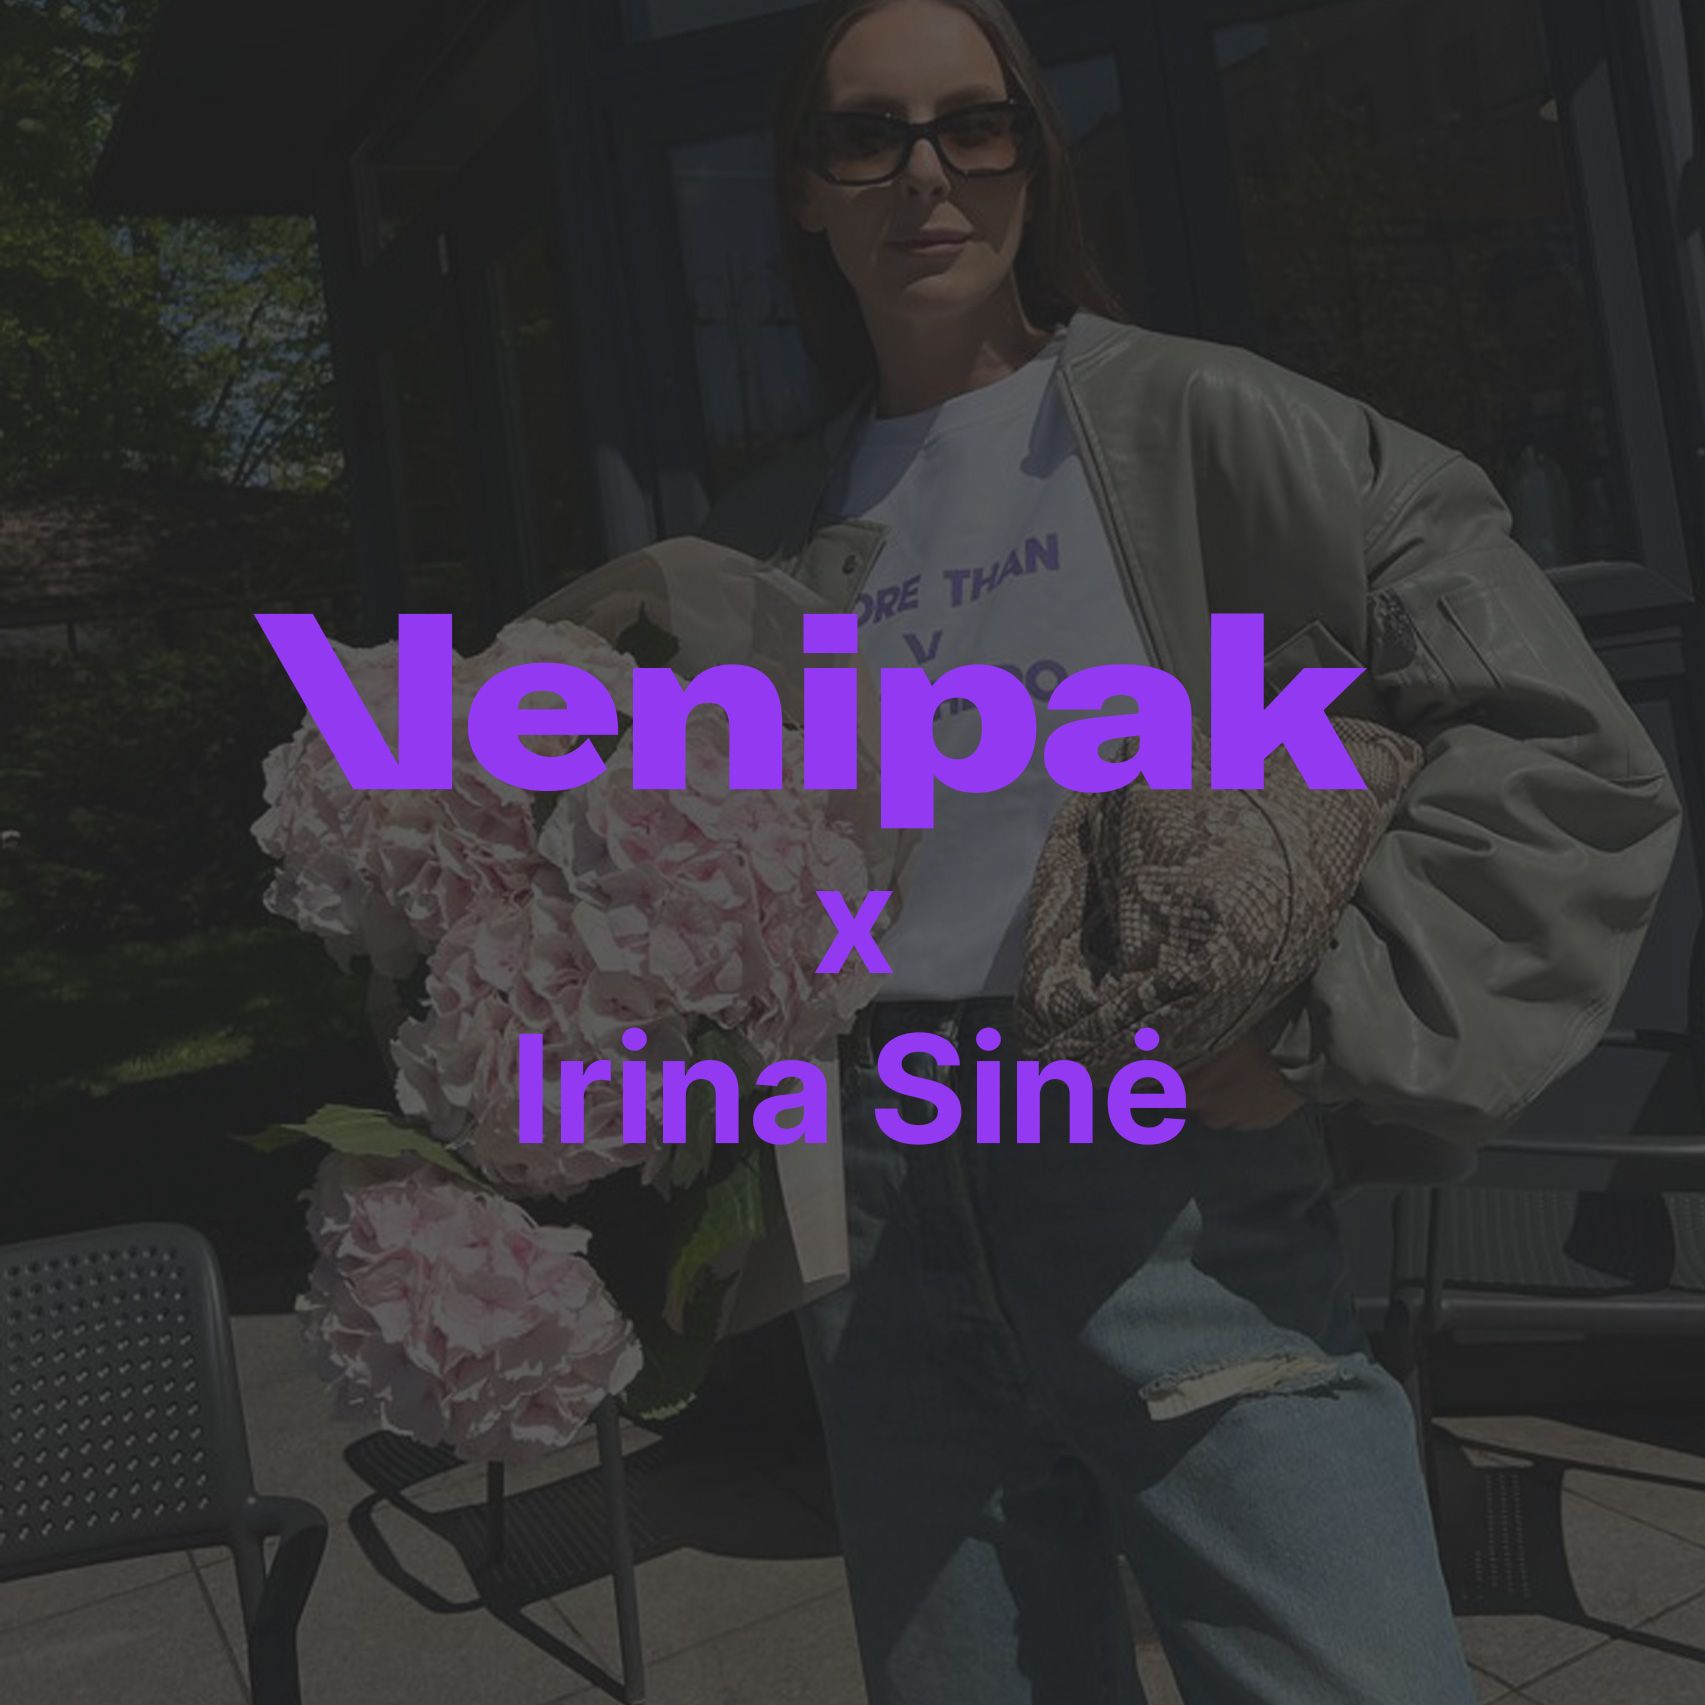 Berta-And-Agency_clients-klientai_venipak-x-irina-sine-partneryste